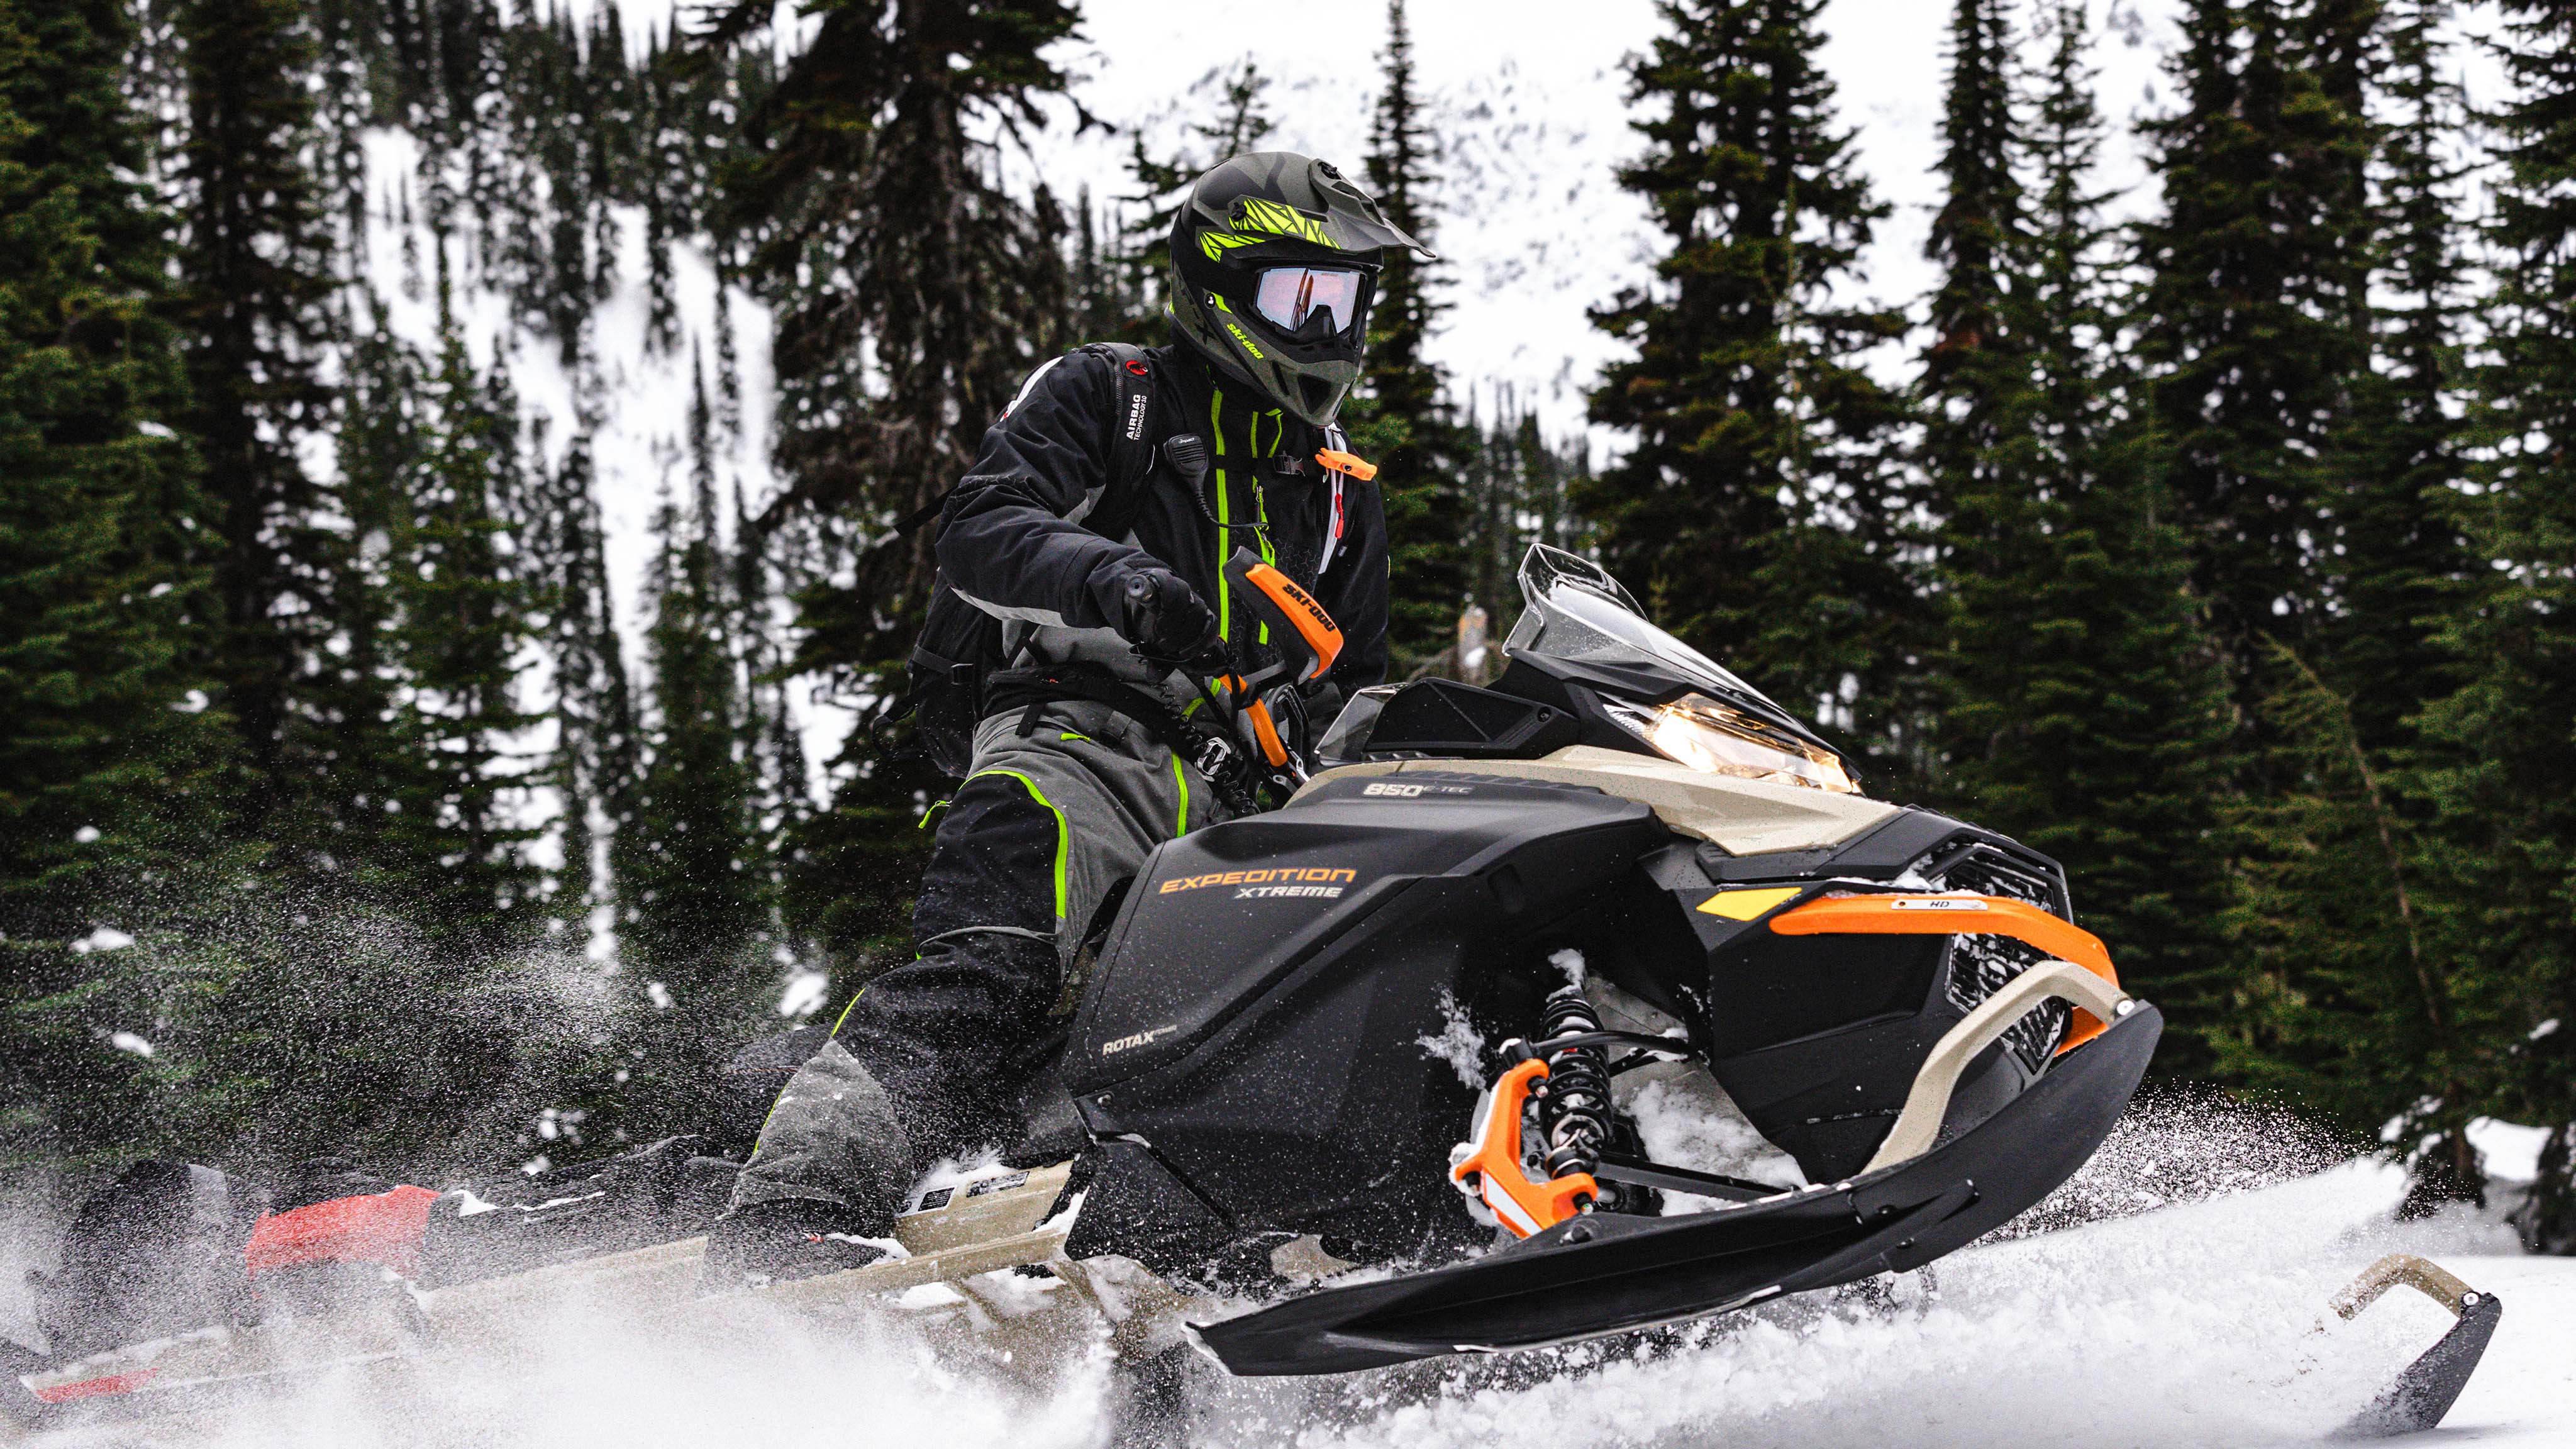 Black & orange Ski-Doo snowmobile on forest trail